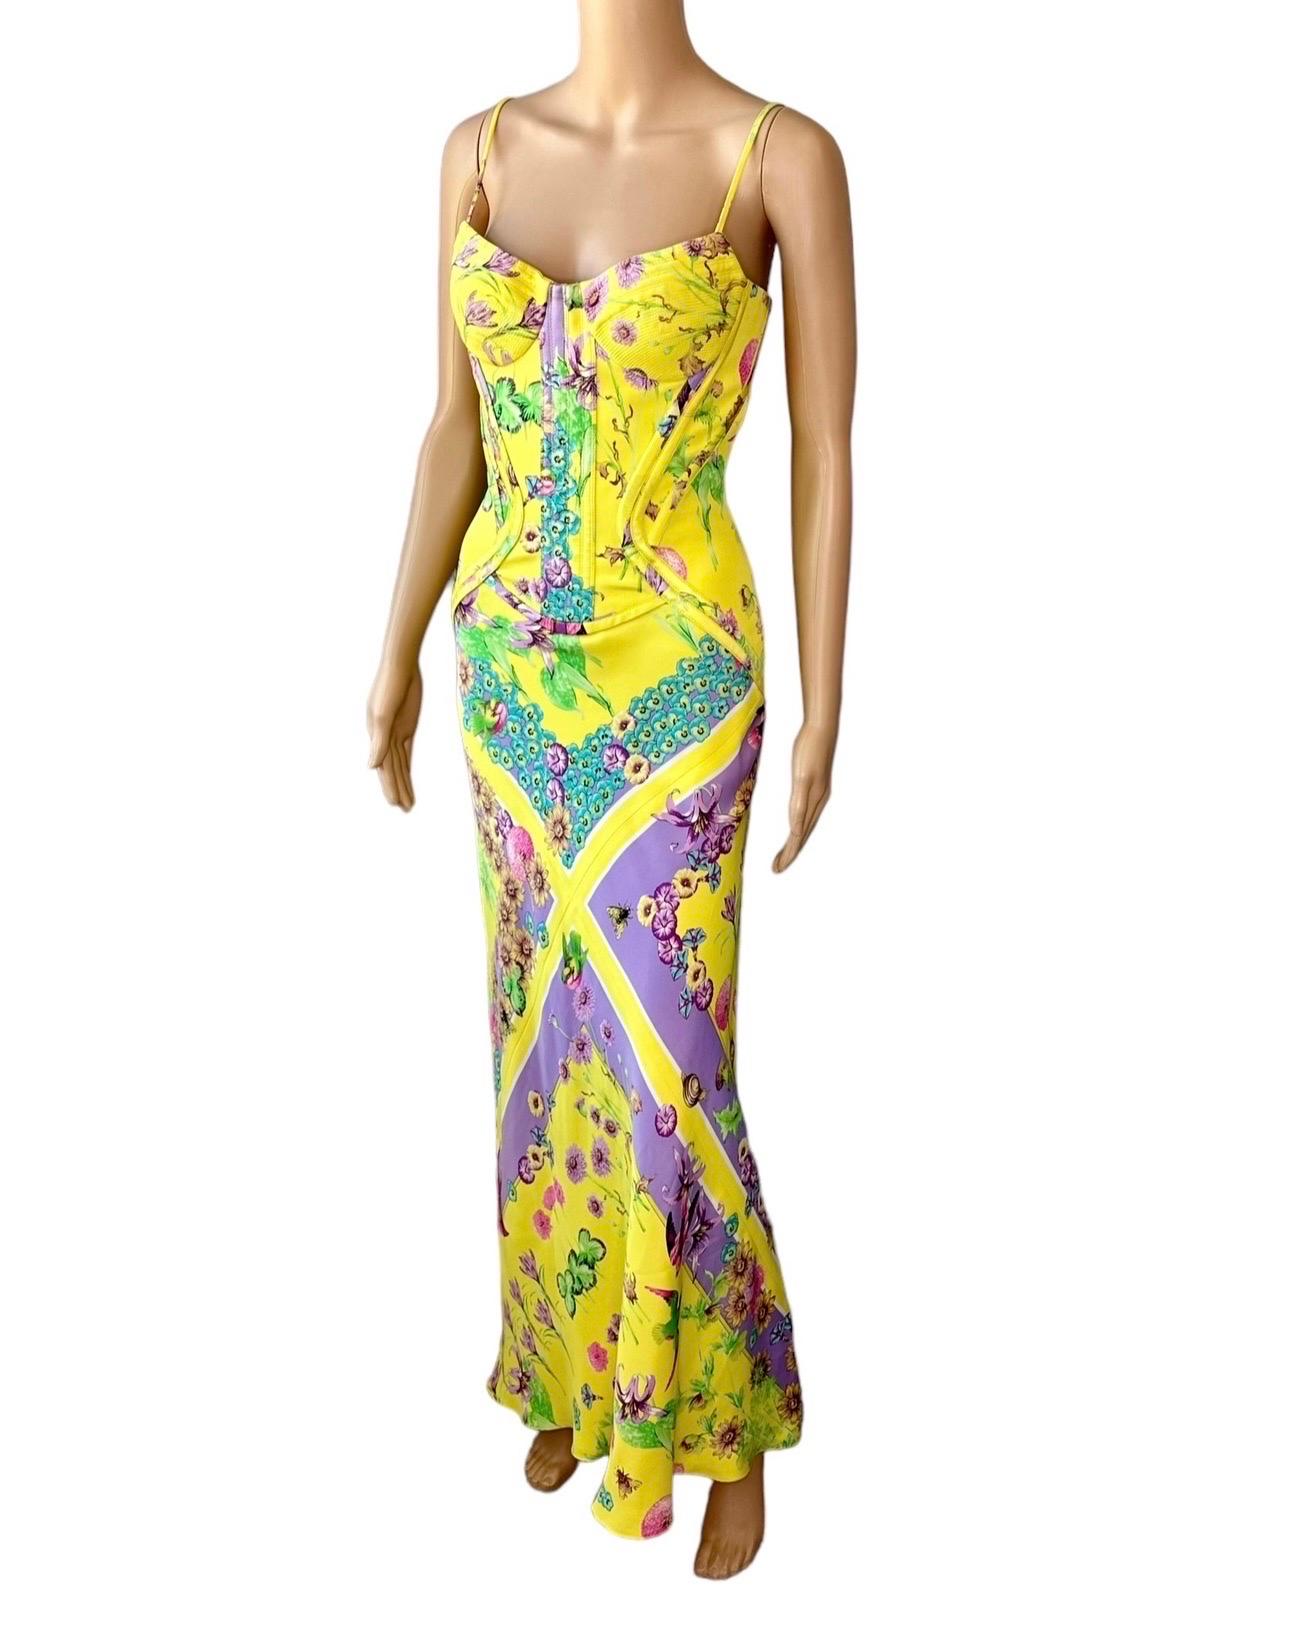 Versace S/S 2006 Bustier Corset Floral Print Evening Dress Gown 1